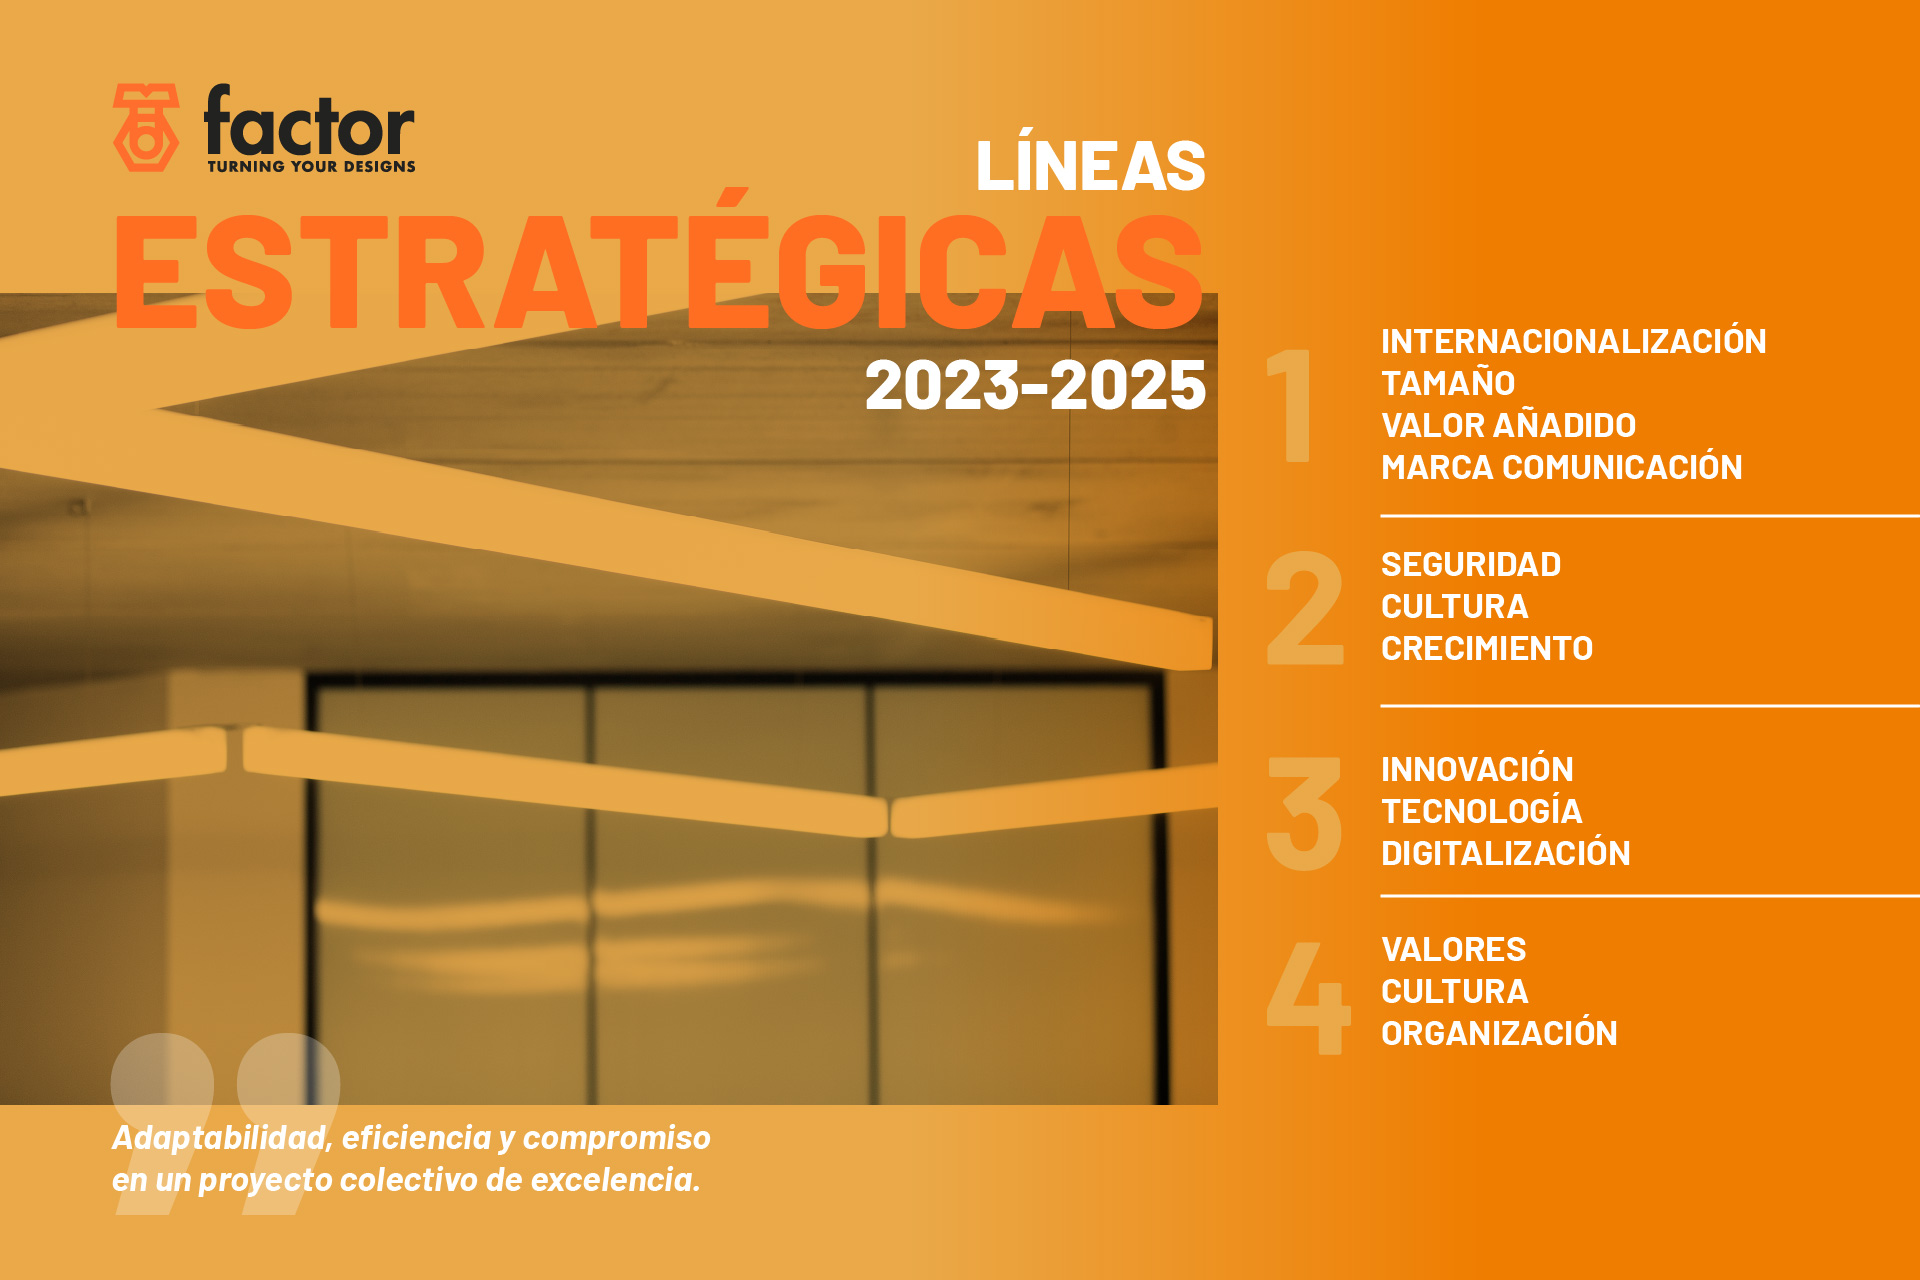 Factor strategic lines for 2023-25